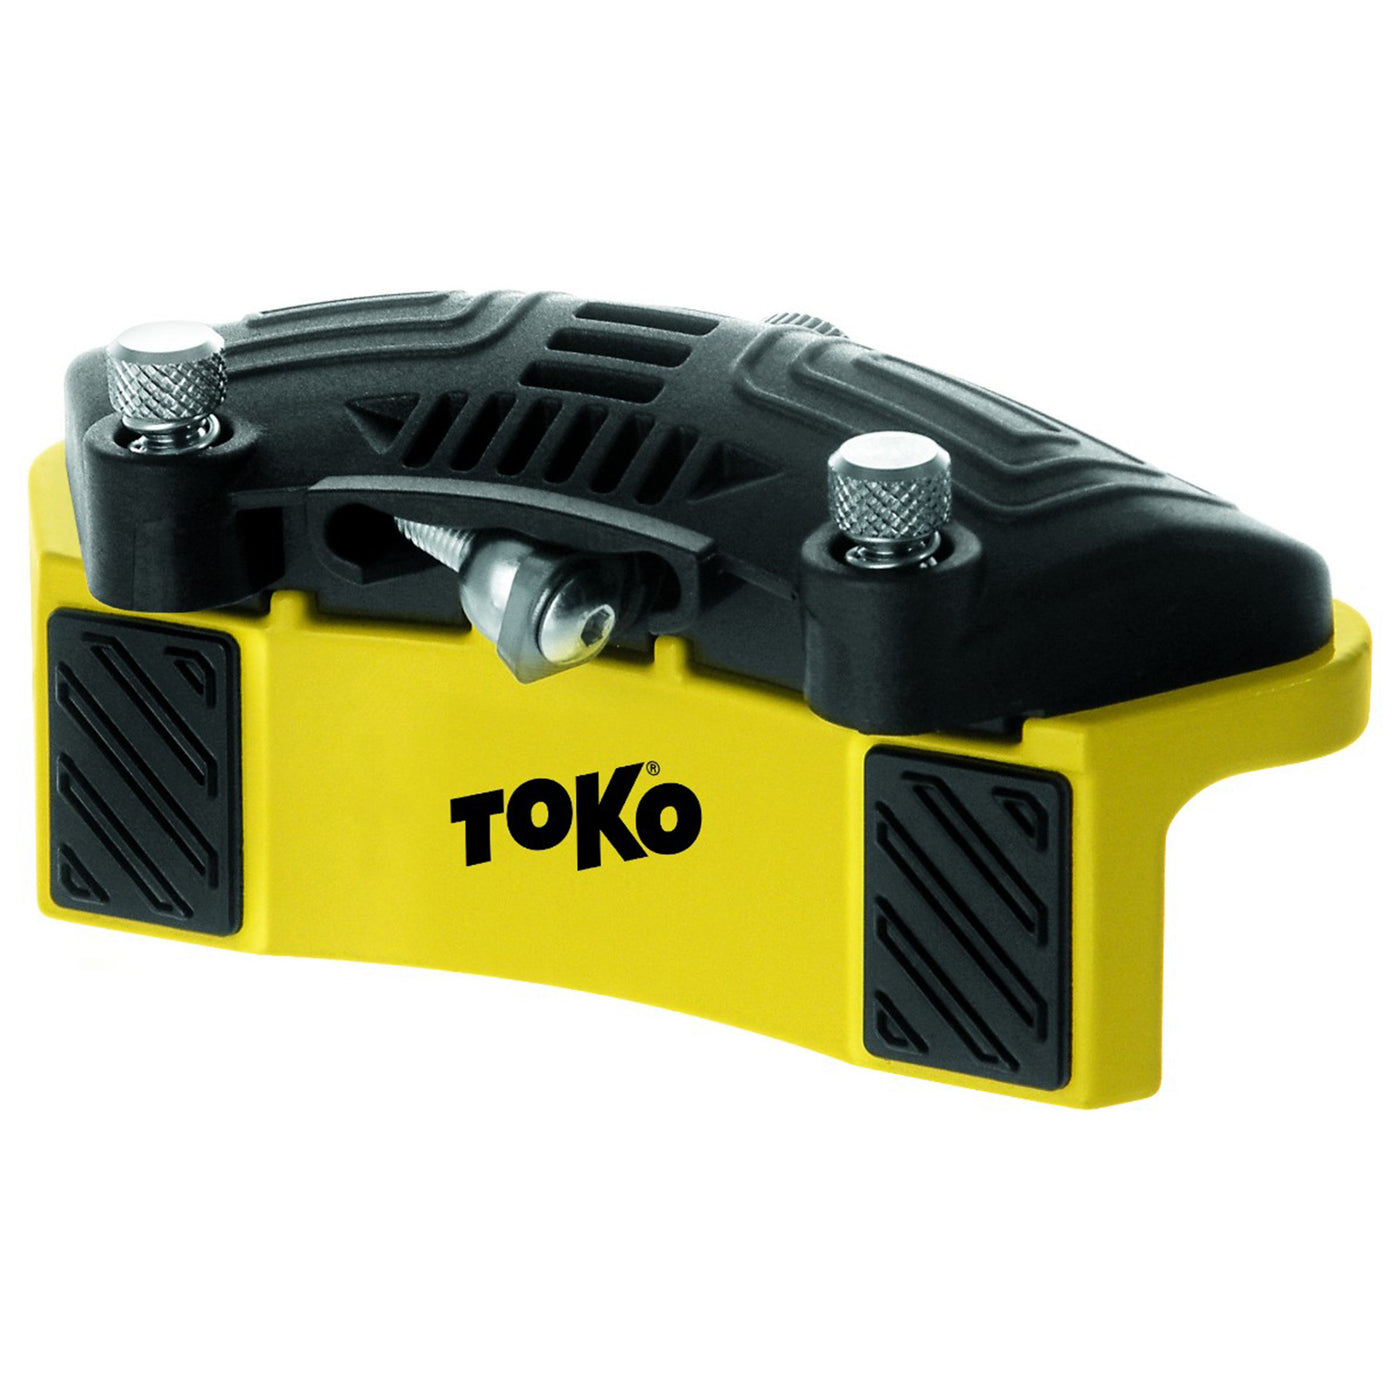 Toko Sidewall Planer Pro (Open Box Return) EDGE TOOLS Toko   